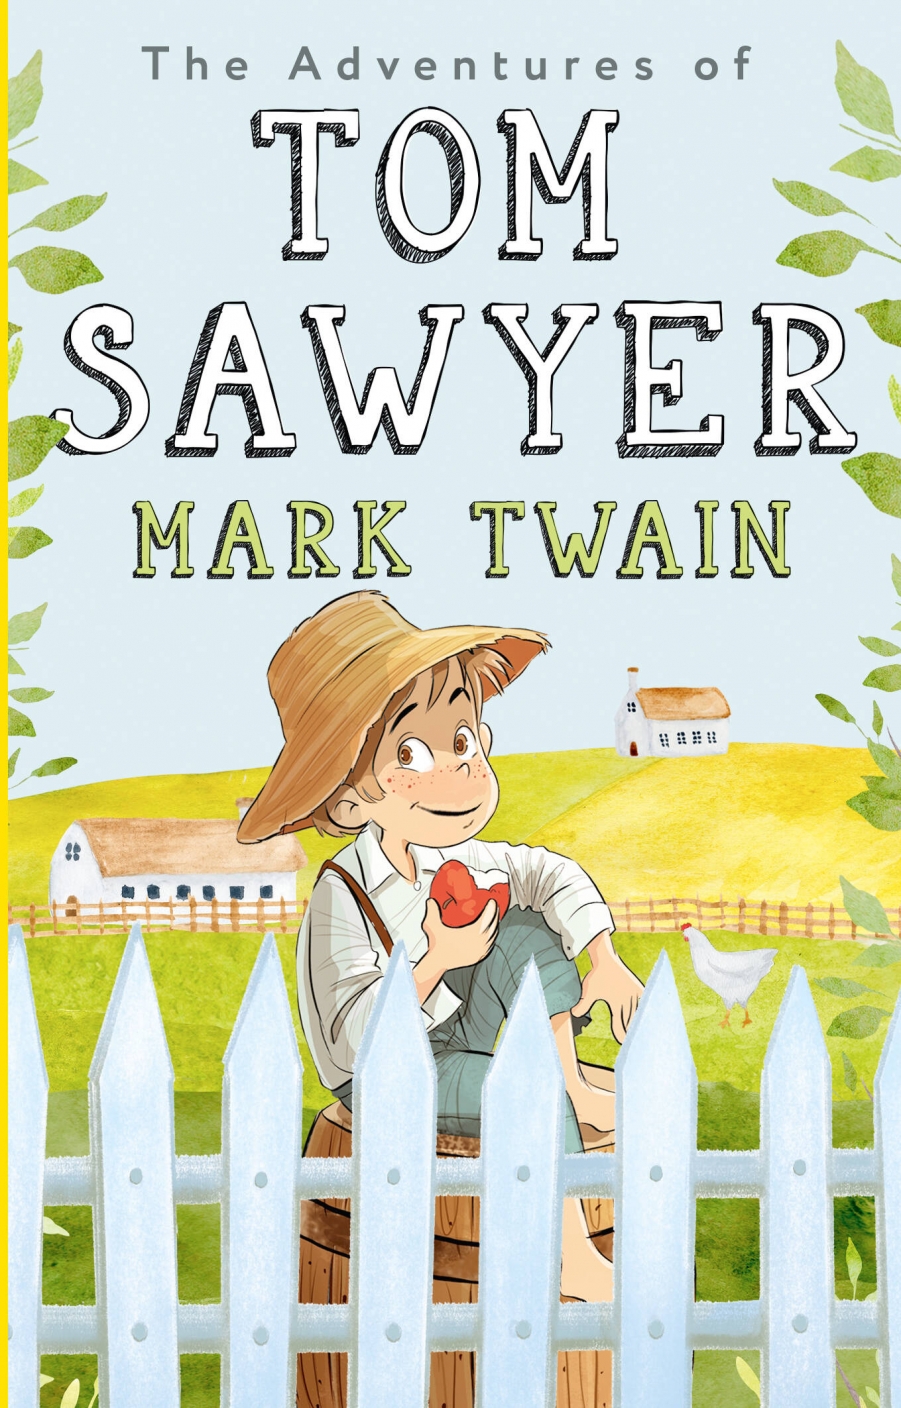 Twain M. The Adventures of Tom Sawyer 